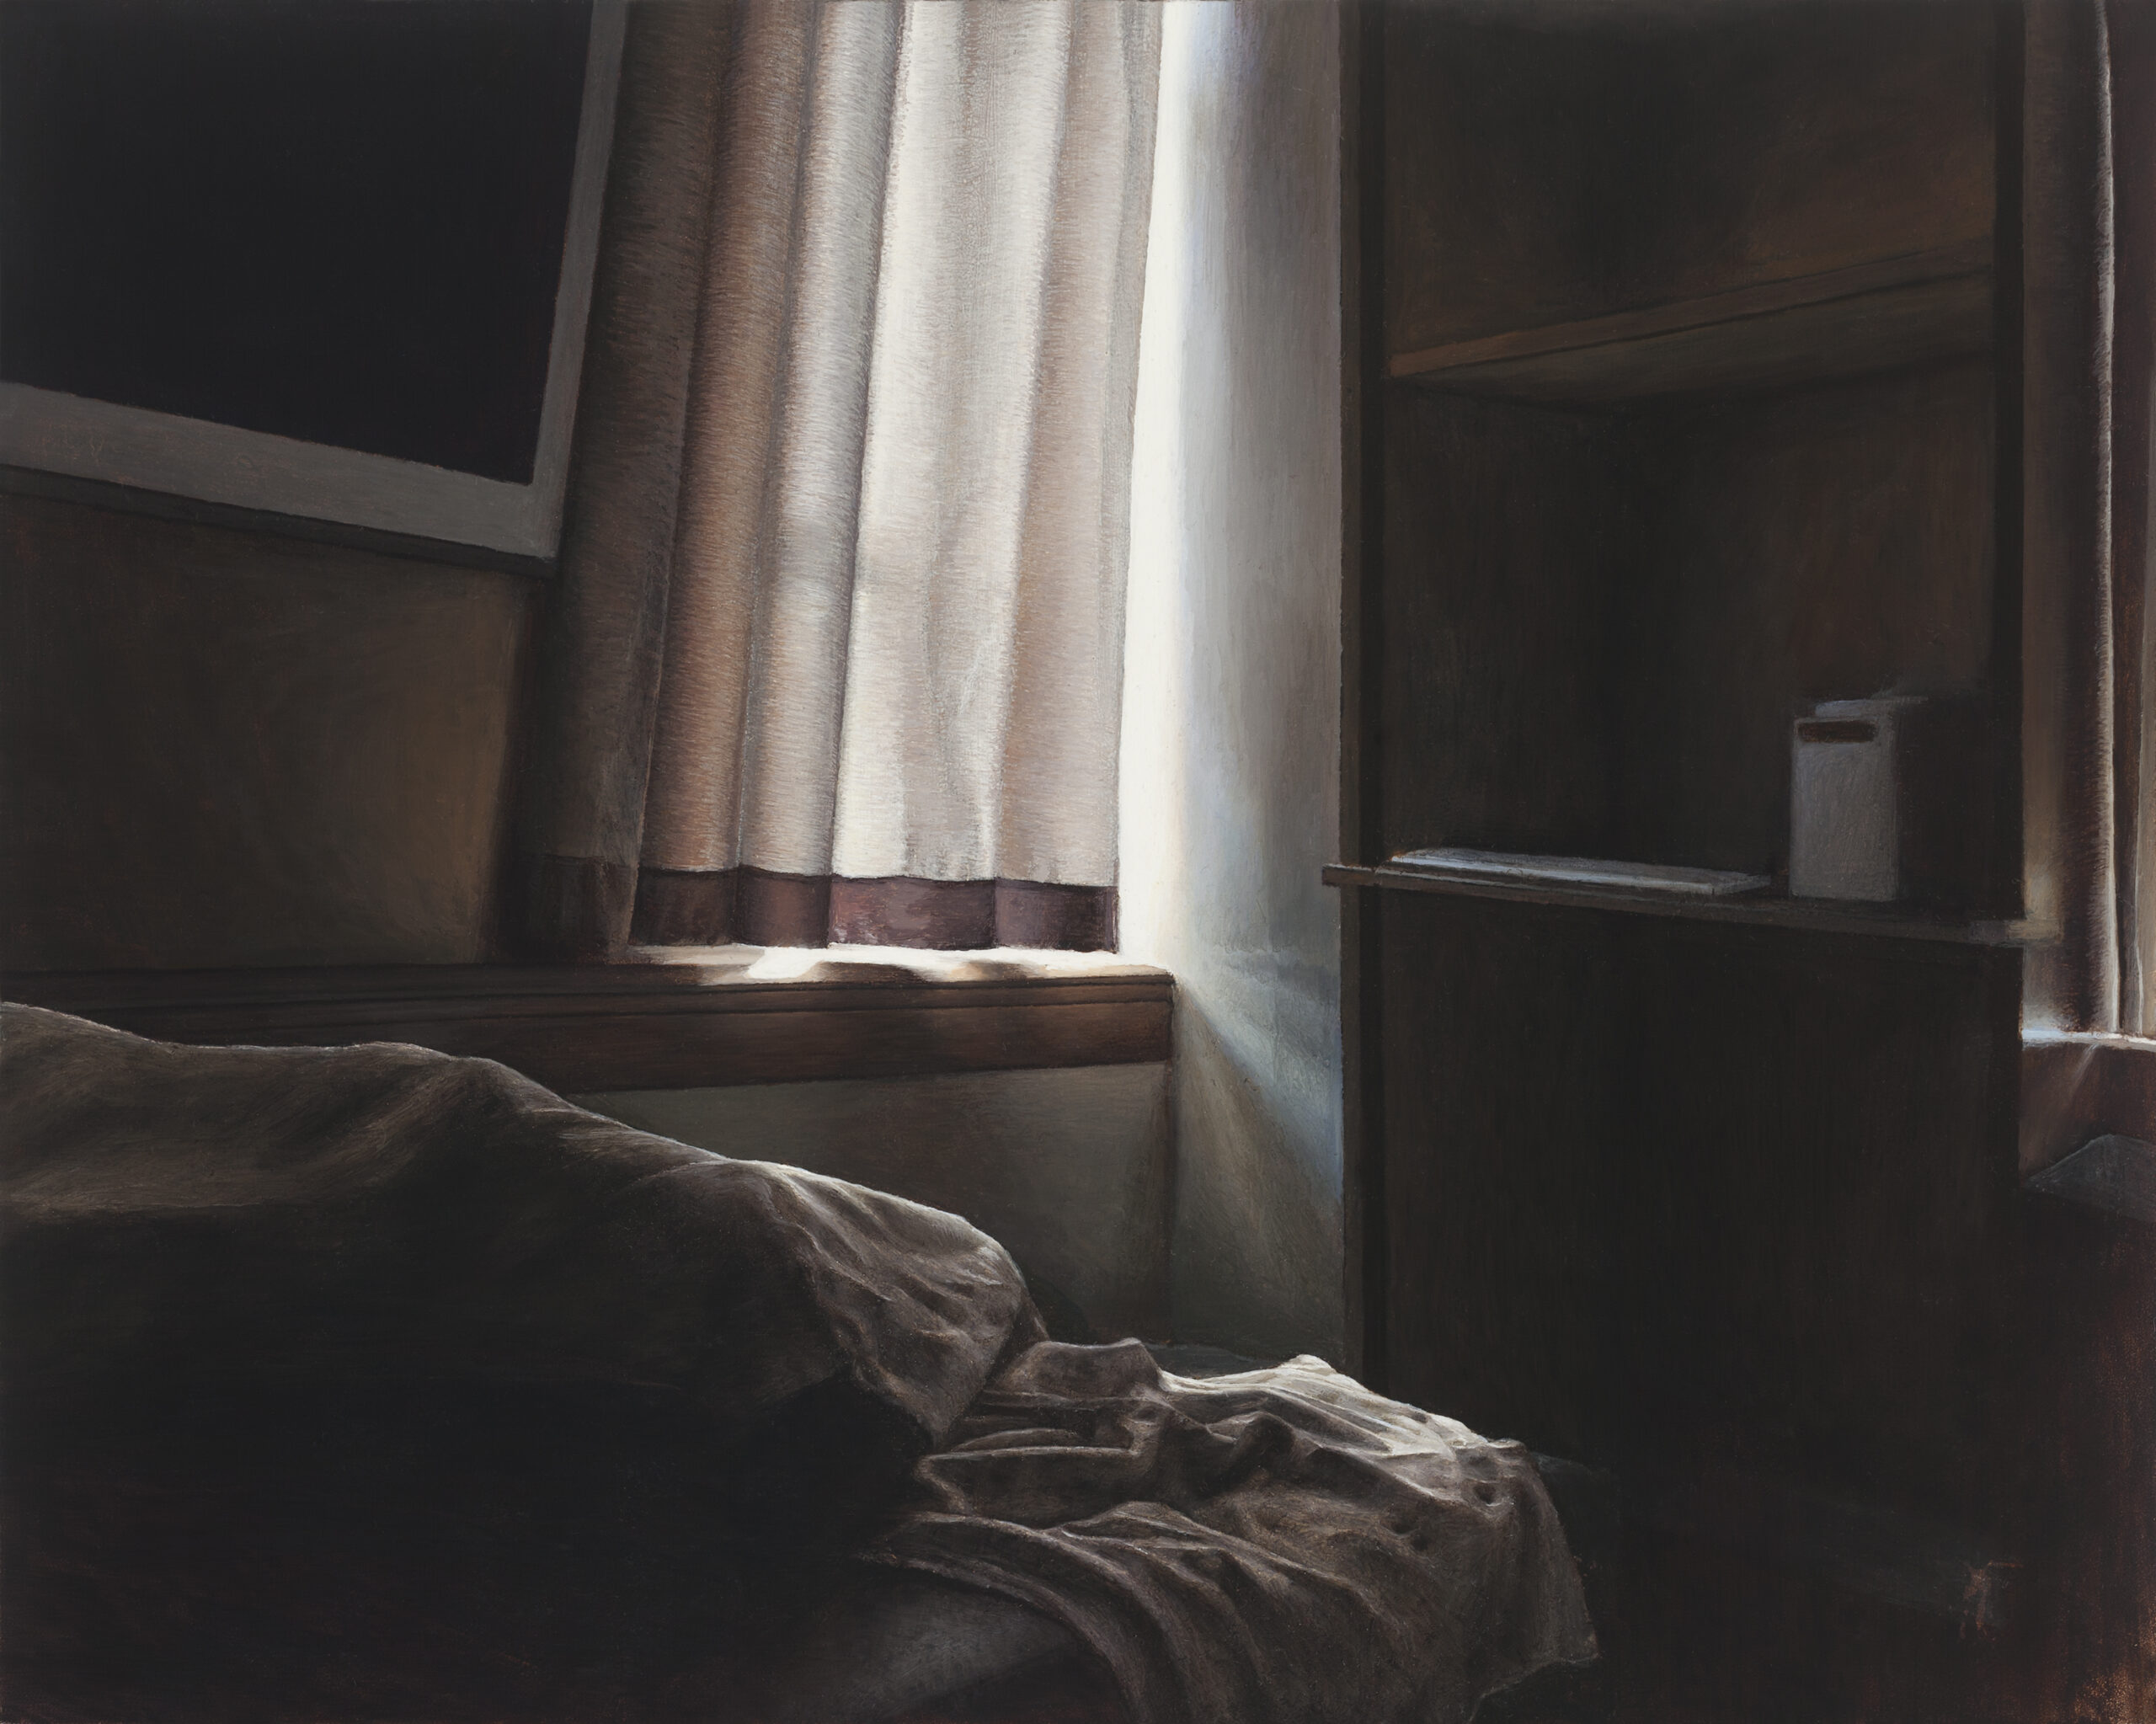 Maya Brodsky, “Dawn, Eda,” 2020, Oil on panel, 8 x 10 inches